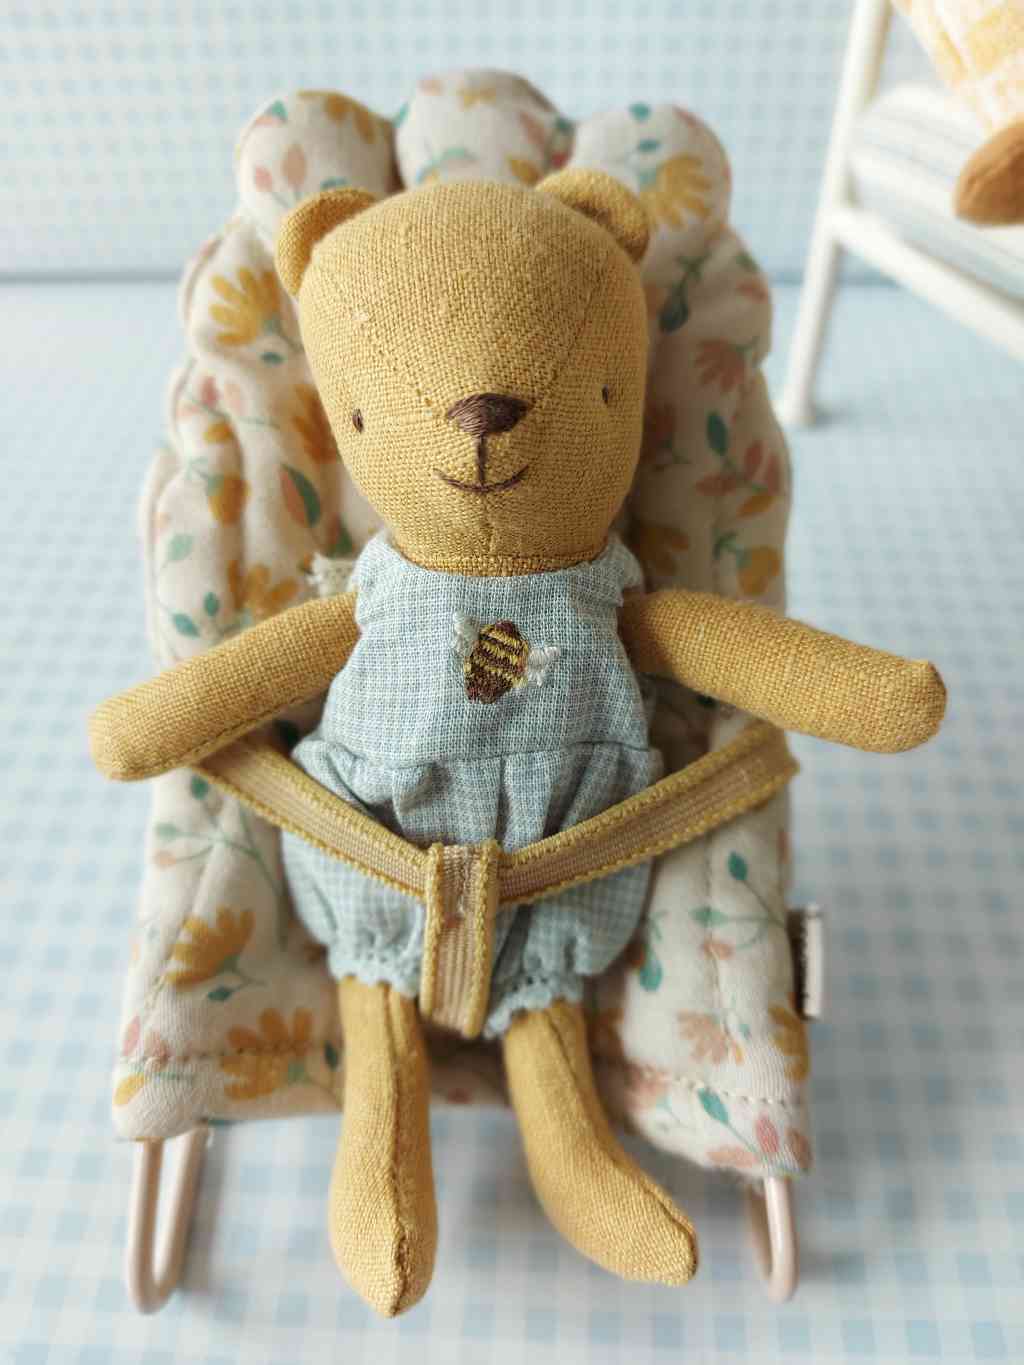 Maileg babybaer teddy in wippe bei www.luiseundfritz.de